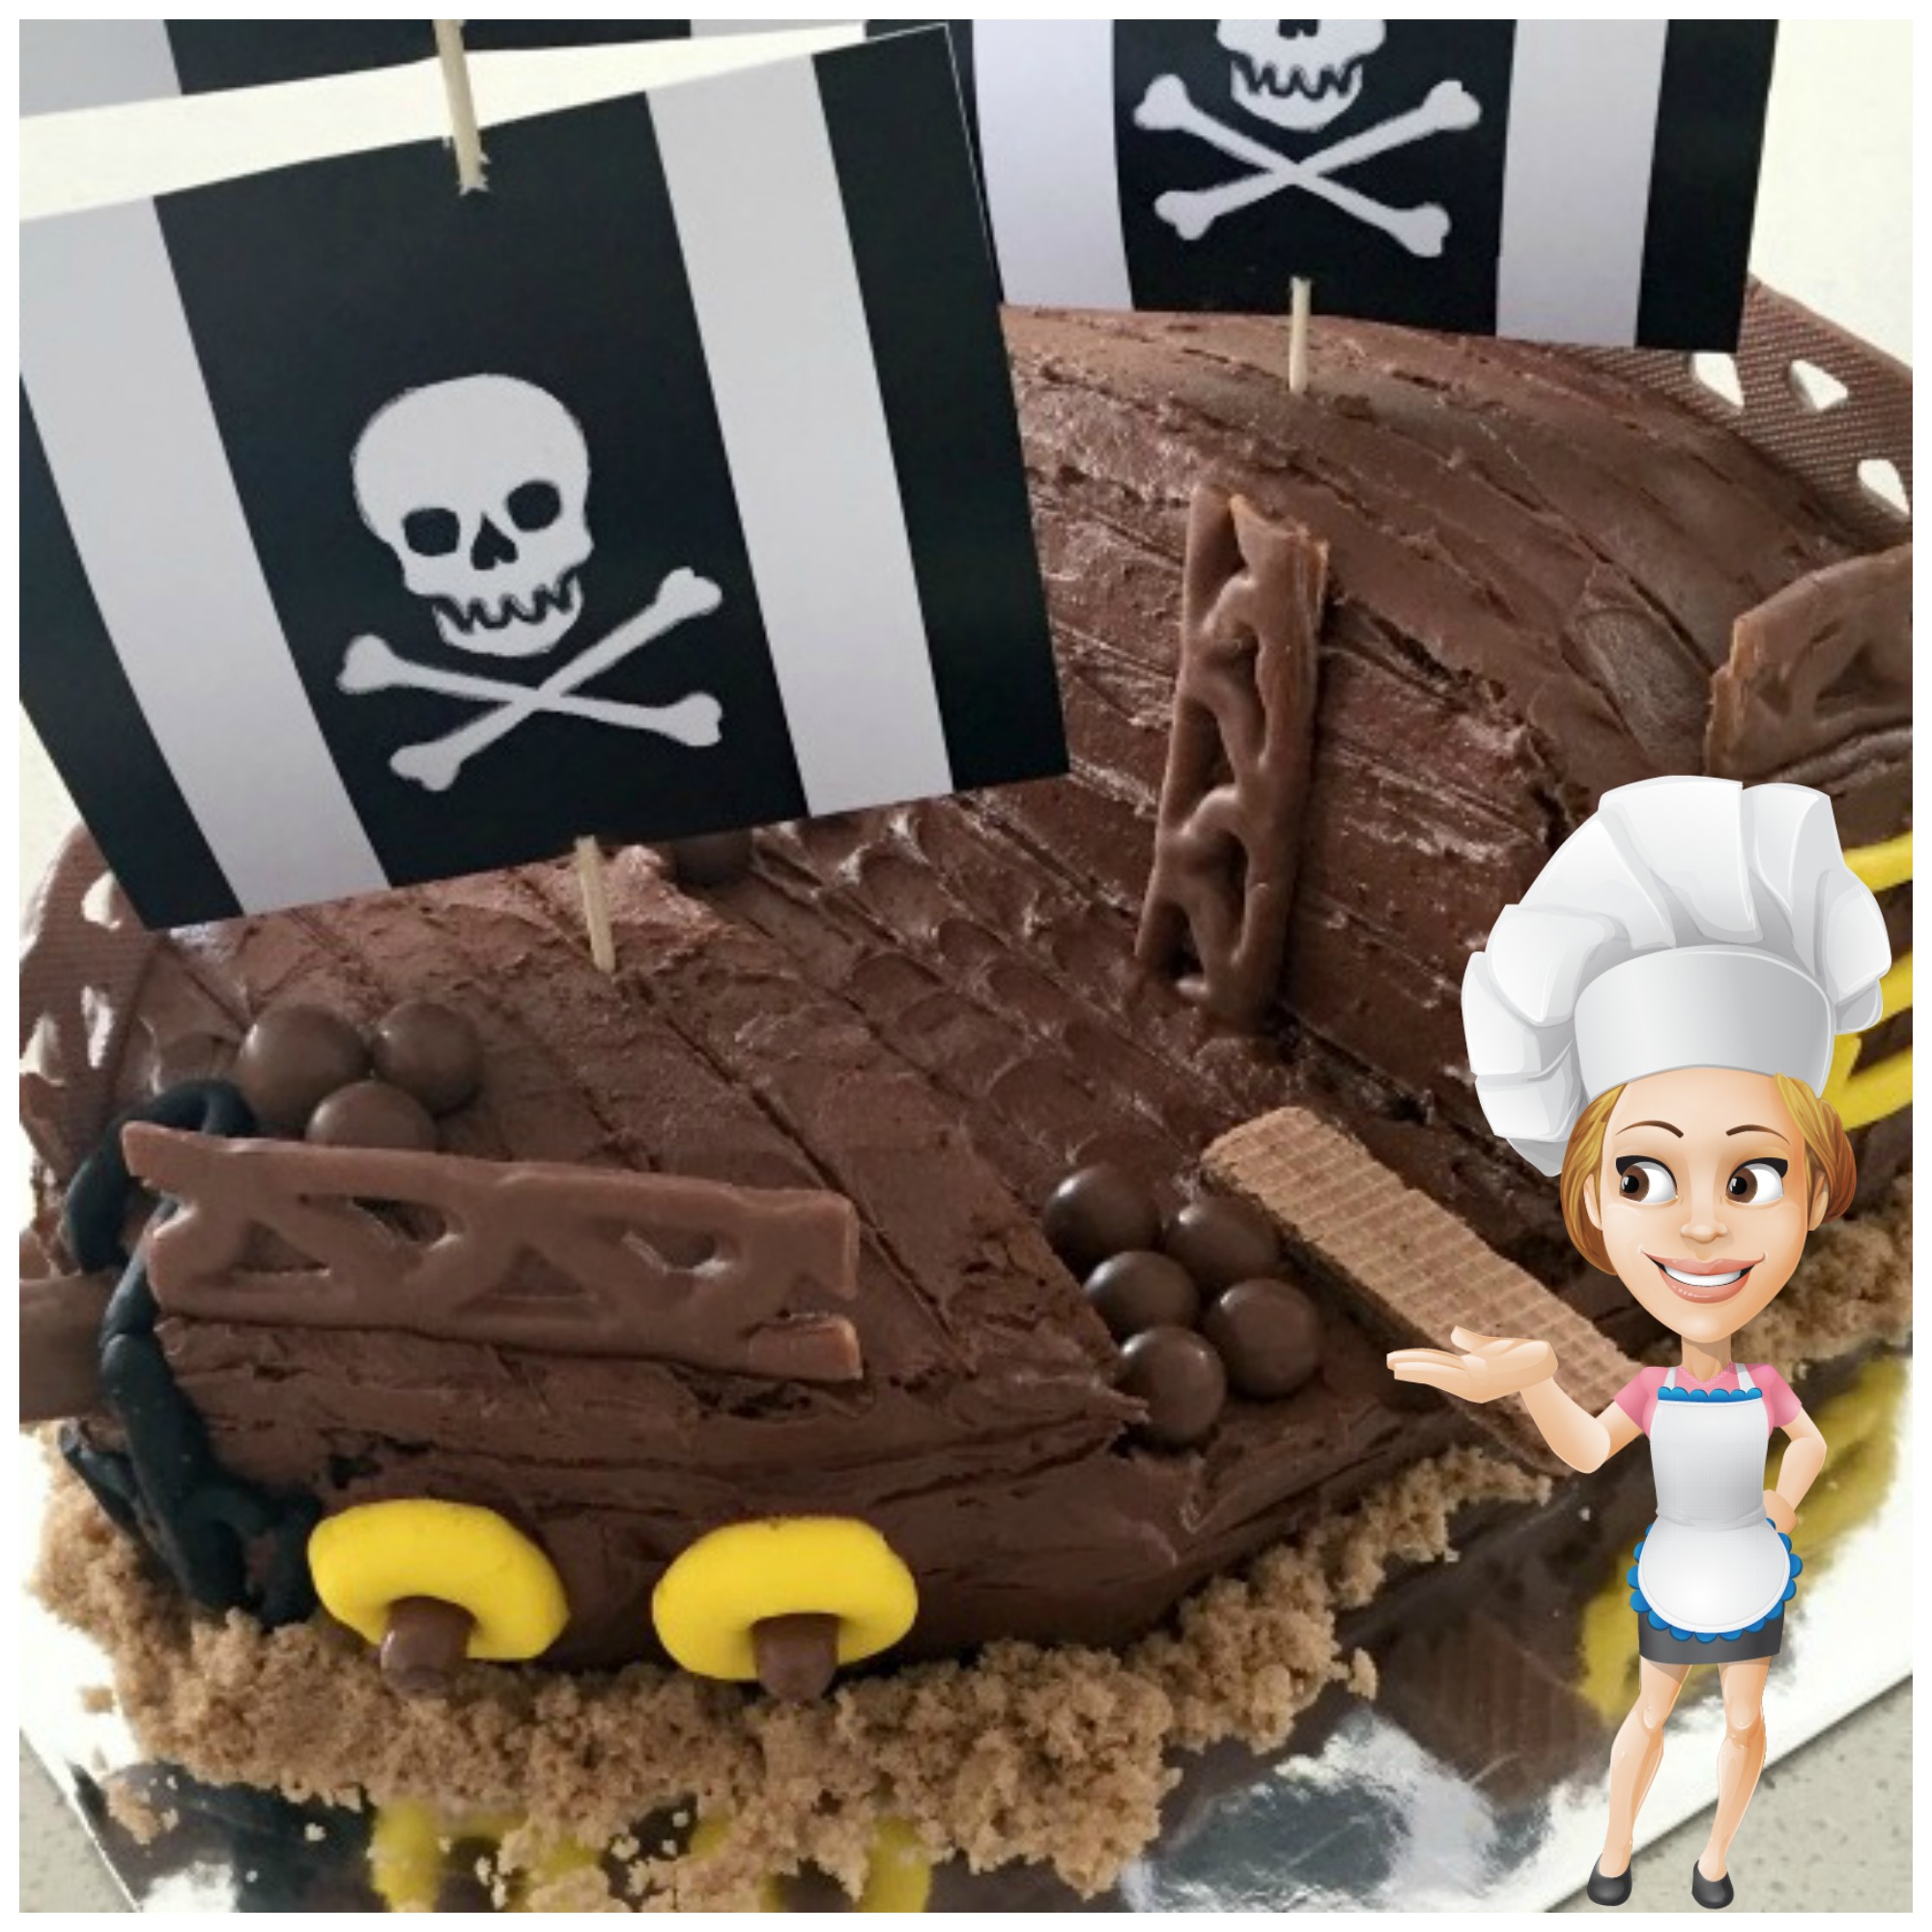 Lauren cake 2 the rescue pirate ship